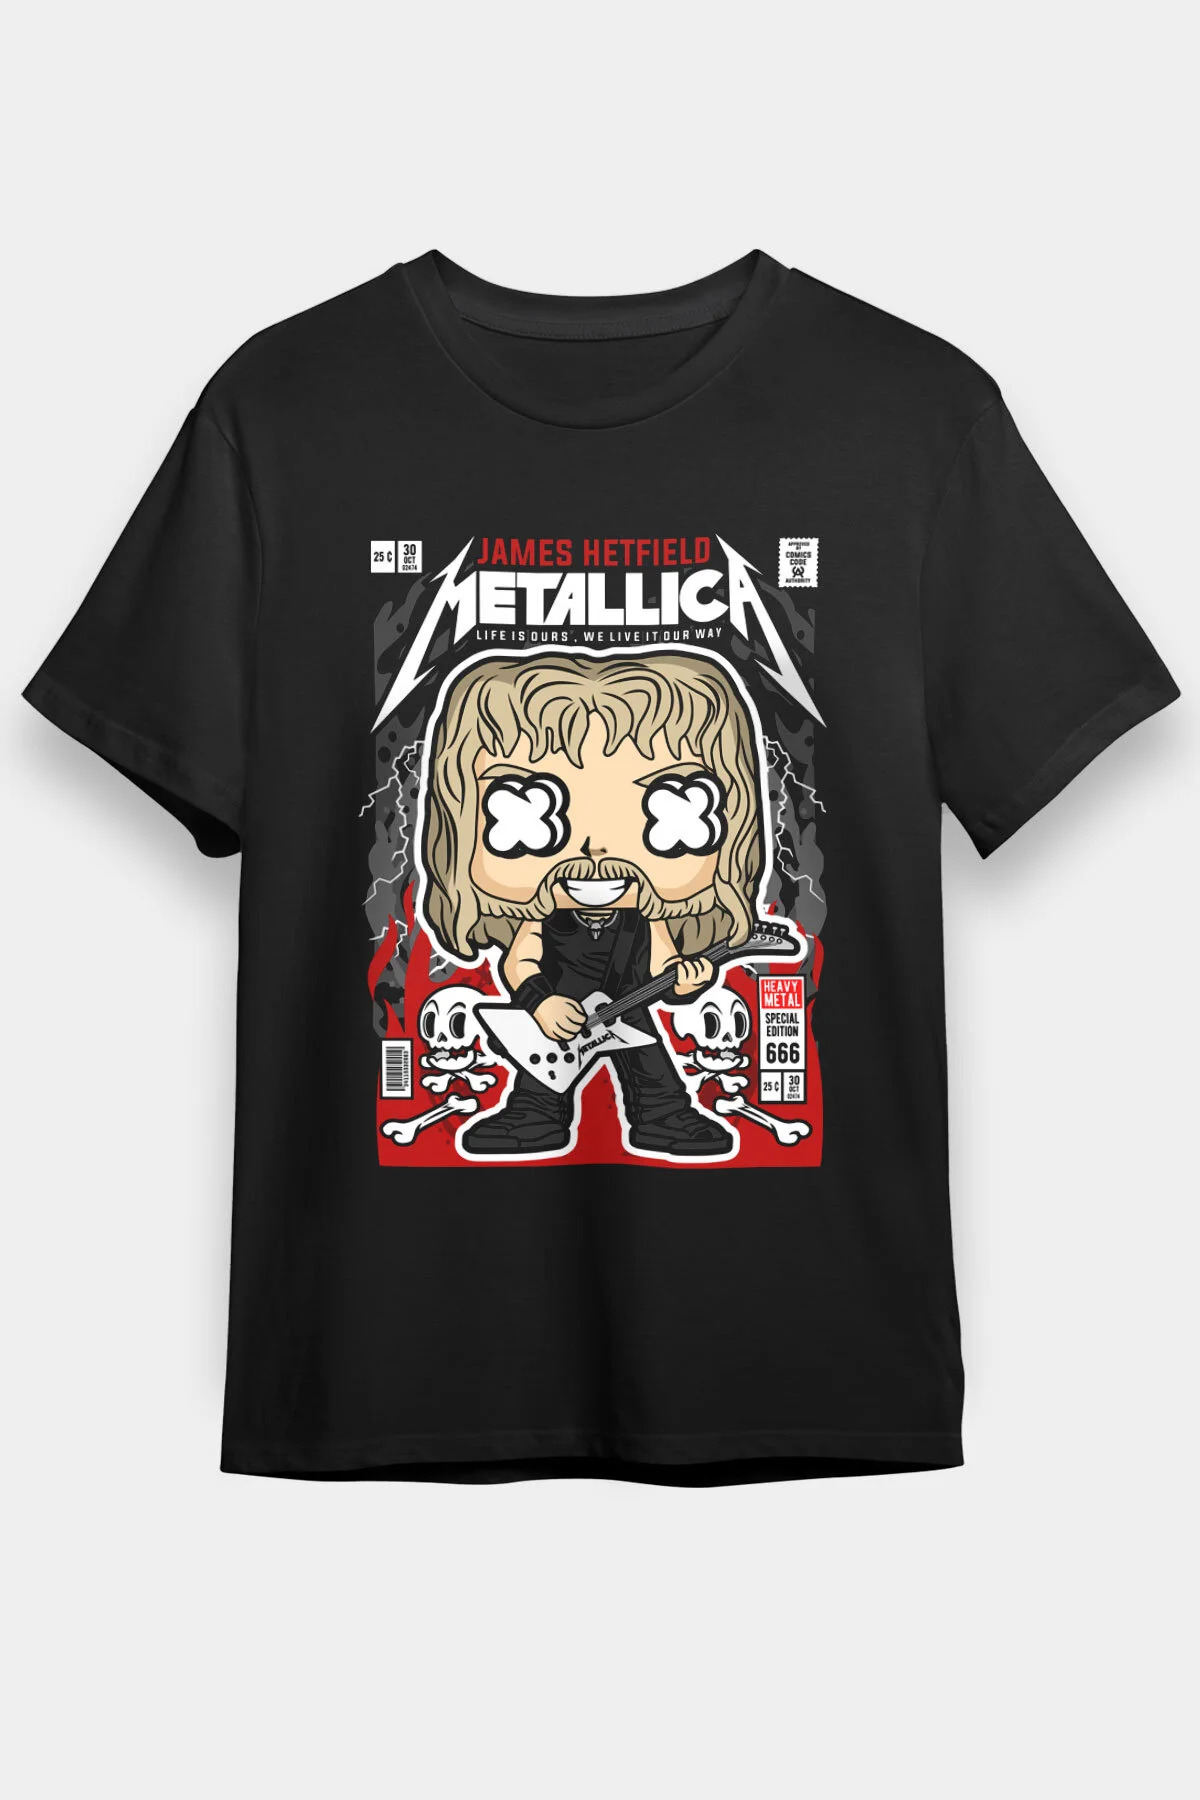 Metallica T shirt, Music Band ,Unisex Tshirt 29/